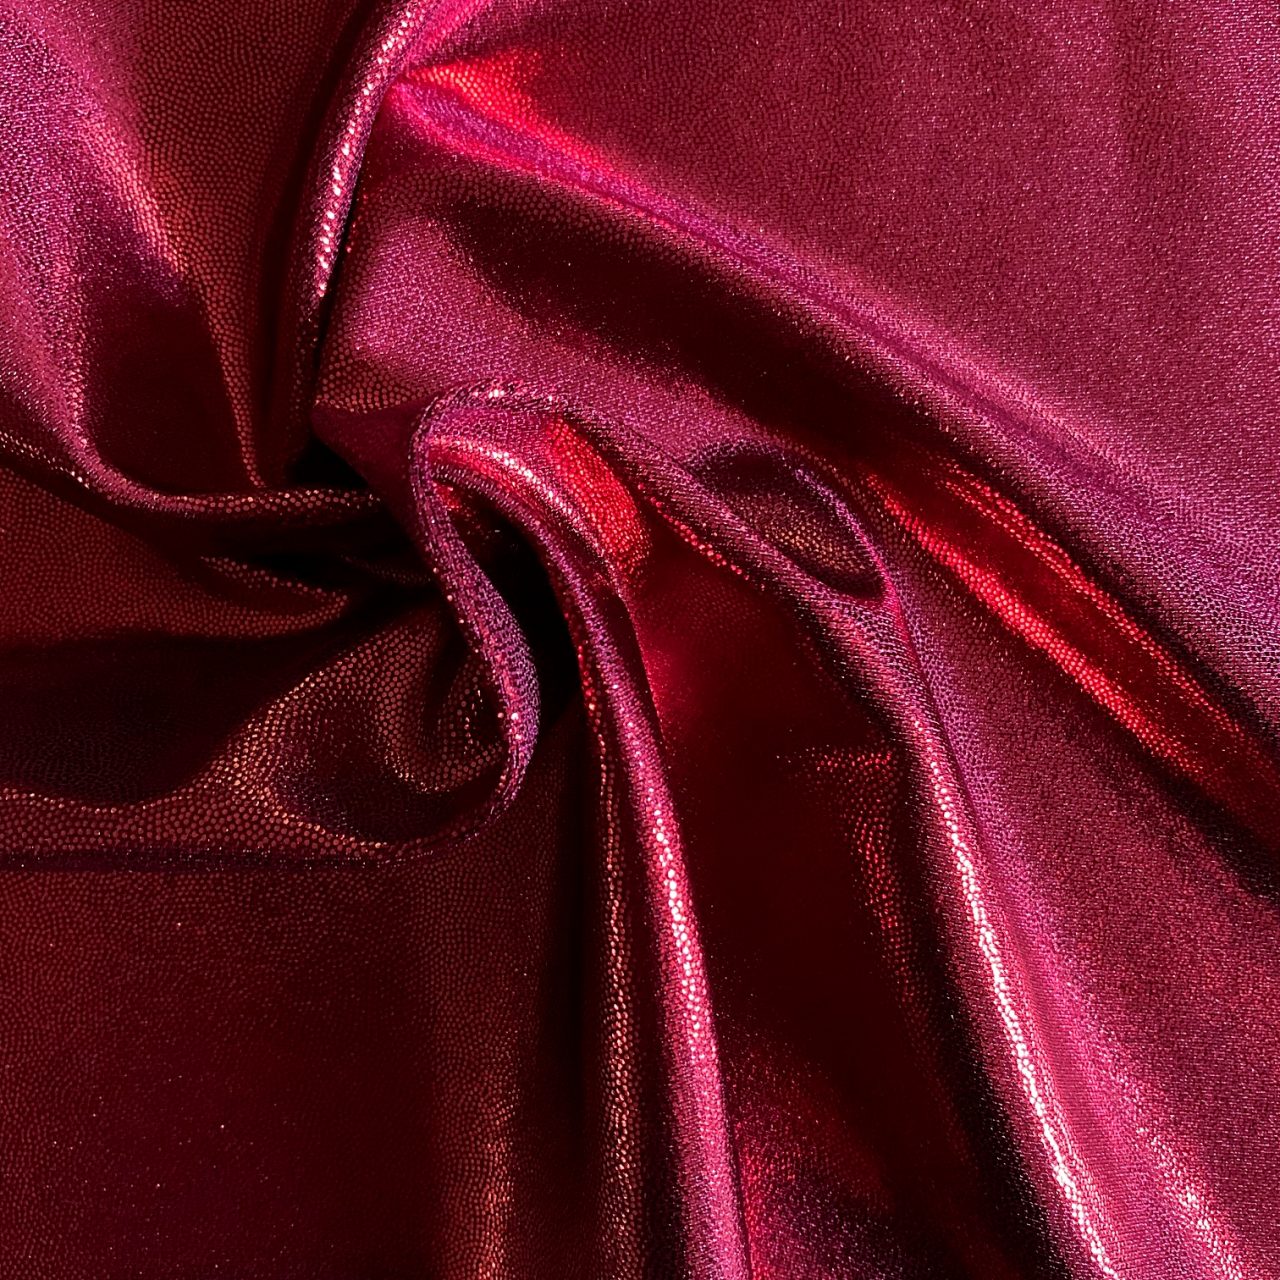 https://www.solidstonefabrics.com/wp-content/uploads/2018/06/Metallic-Sheen-Red-Burgundy-Closeup-Solid-Stone-Fabrics-Inc.-Specialty-Fabric-By-The-Yard.jpg